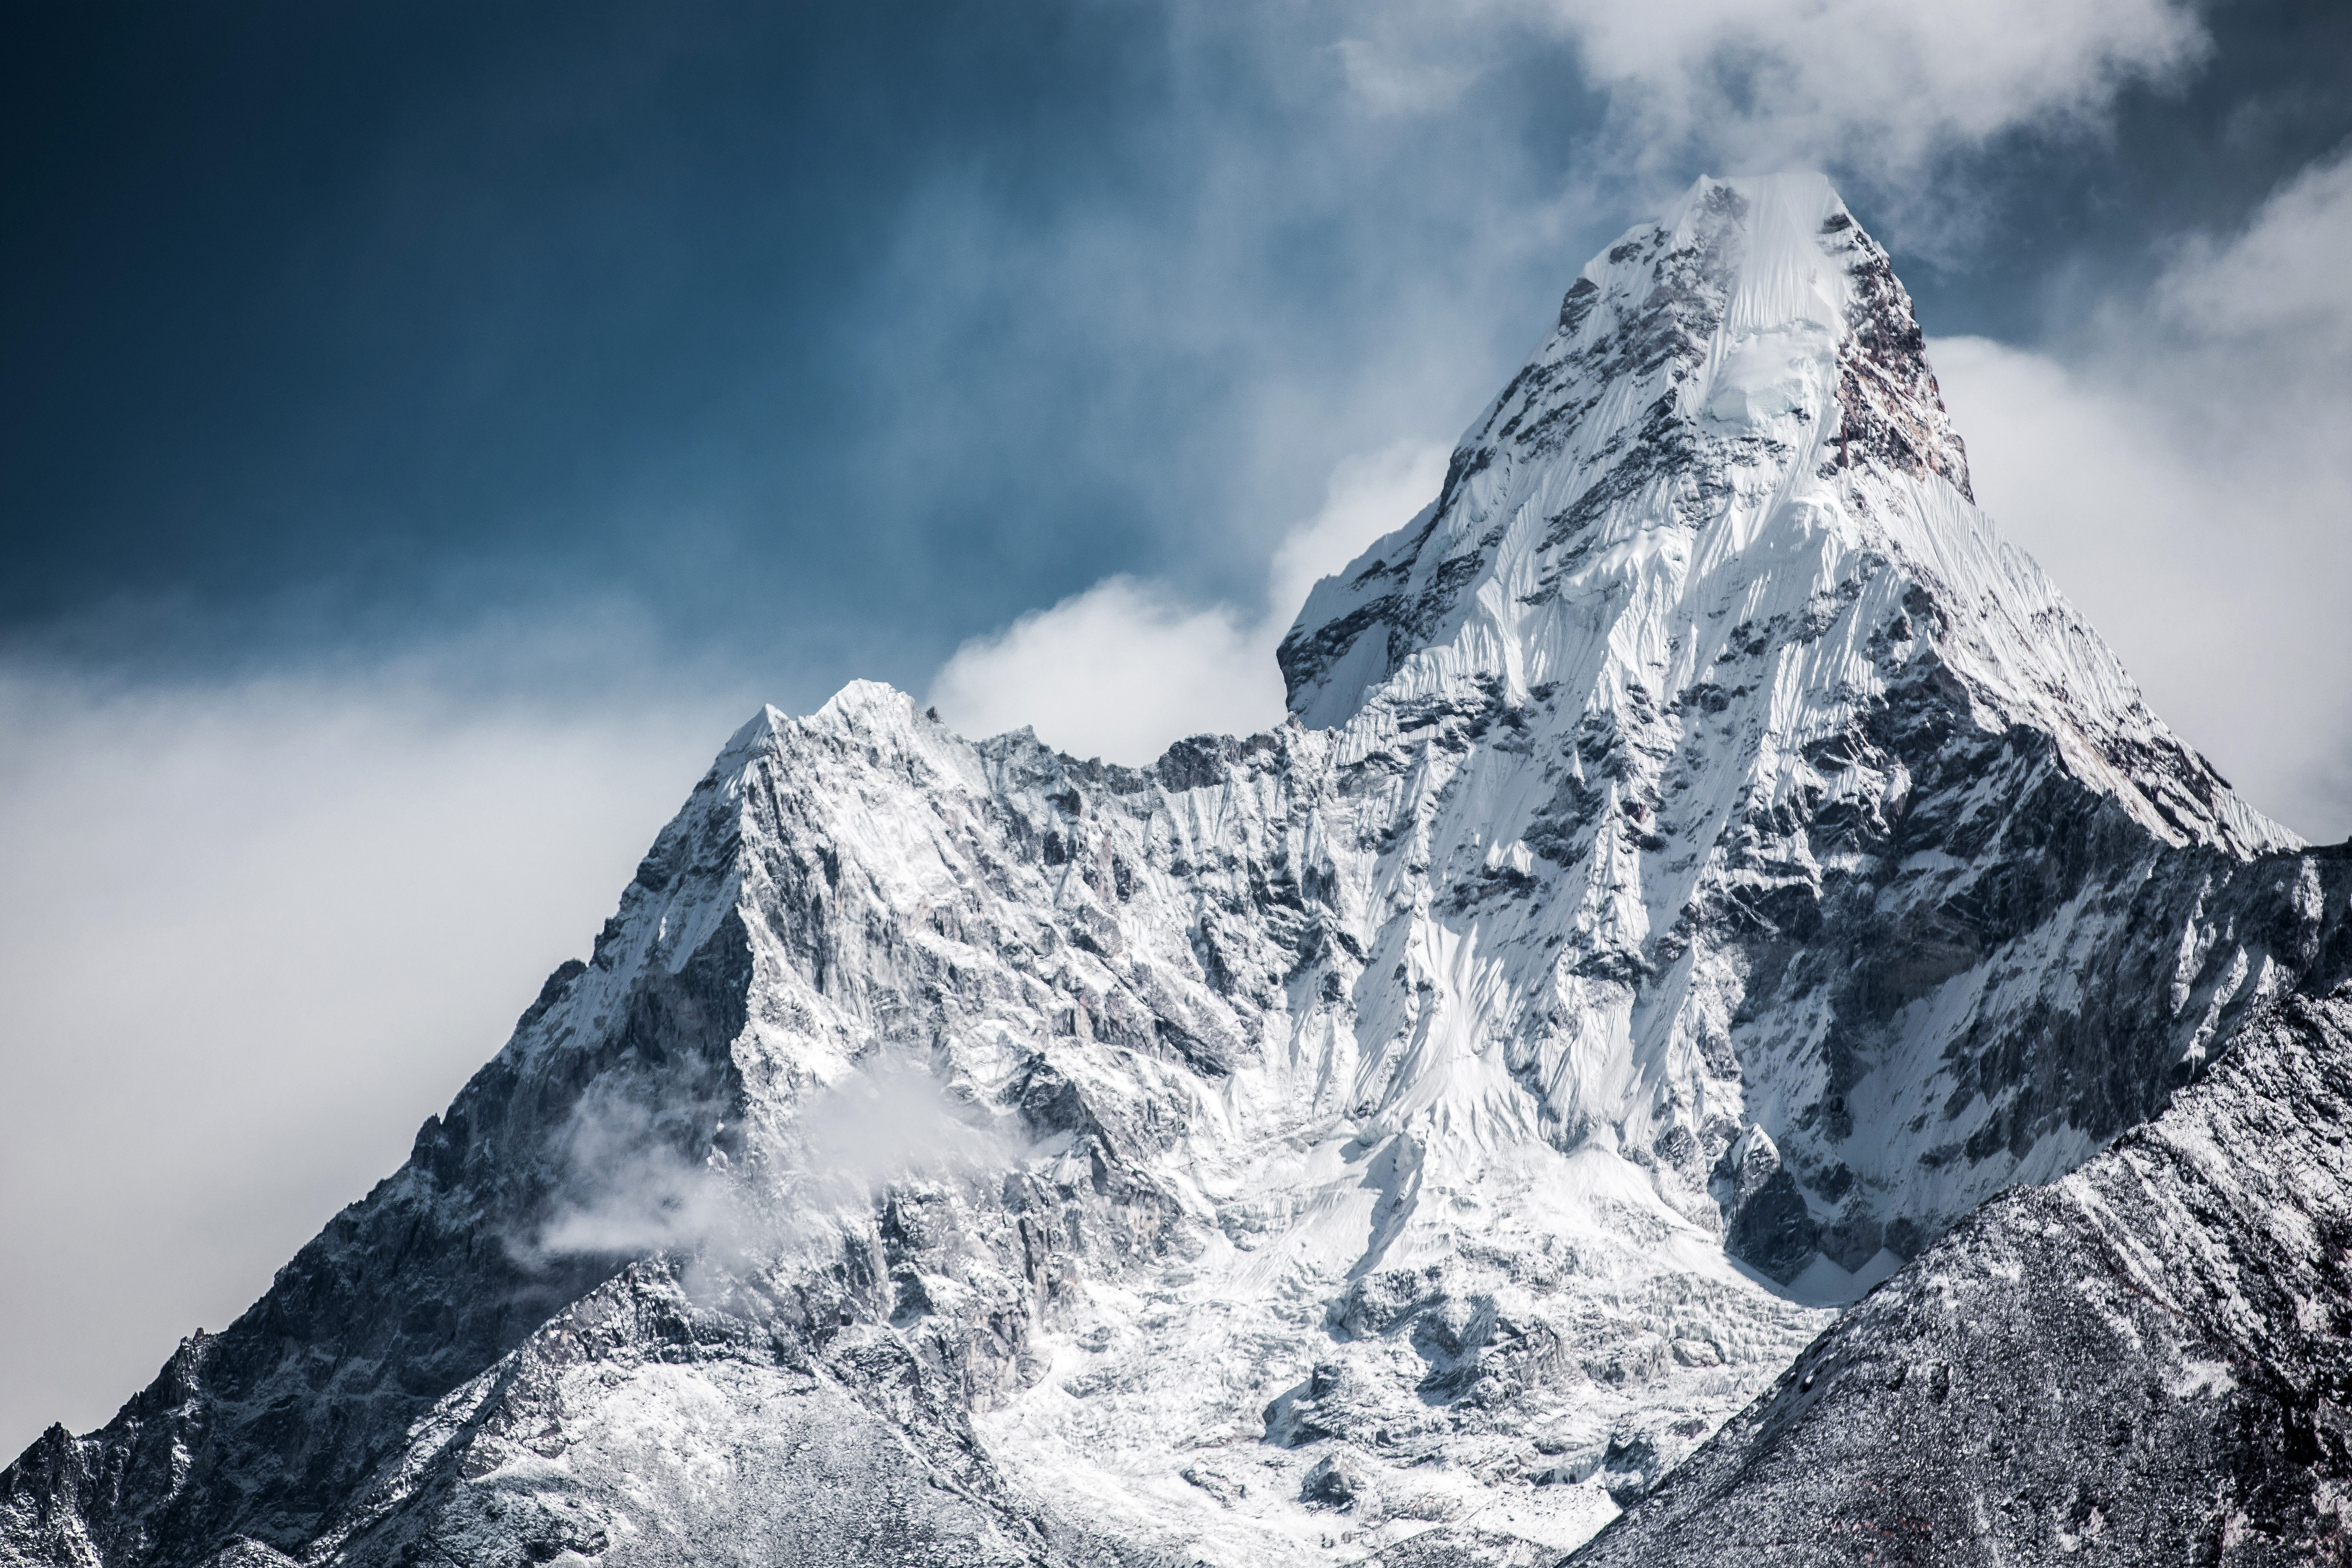 Everest Base Camp under snow in Nepal image - Free stock photo - Public